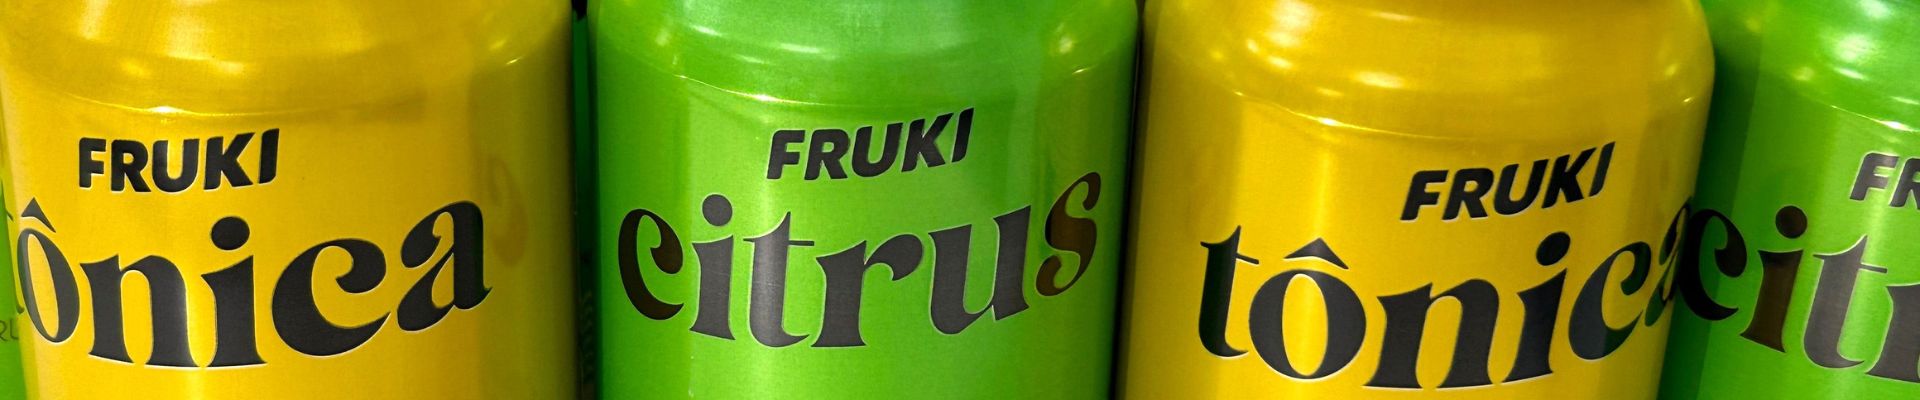 Fruki renova embalagens de Tônica e Citrus